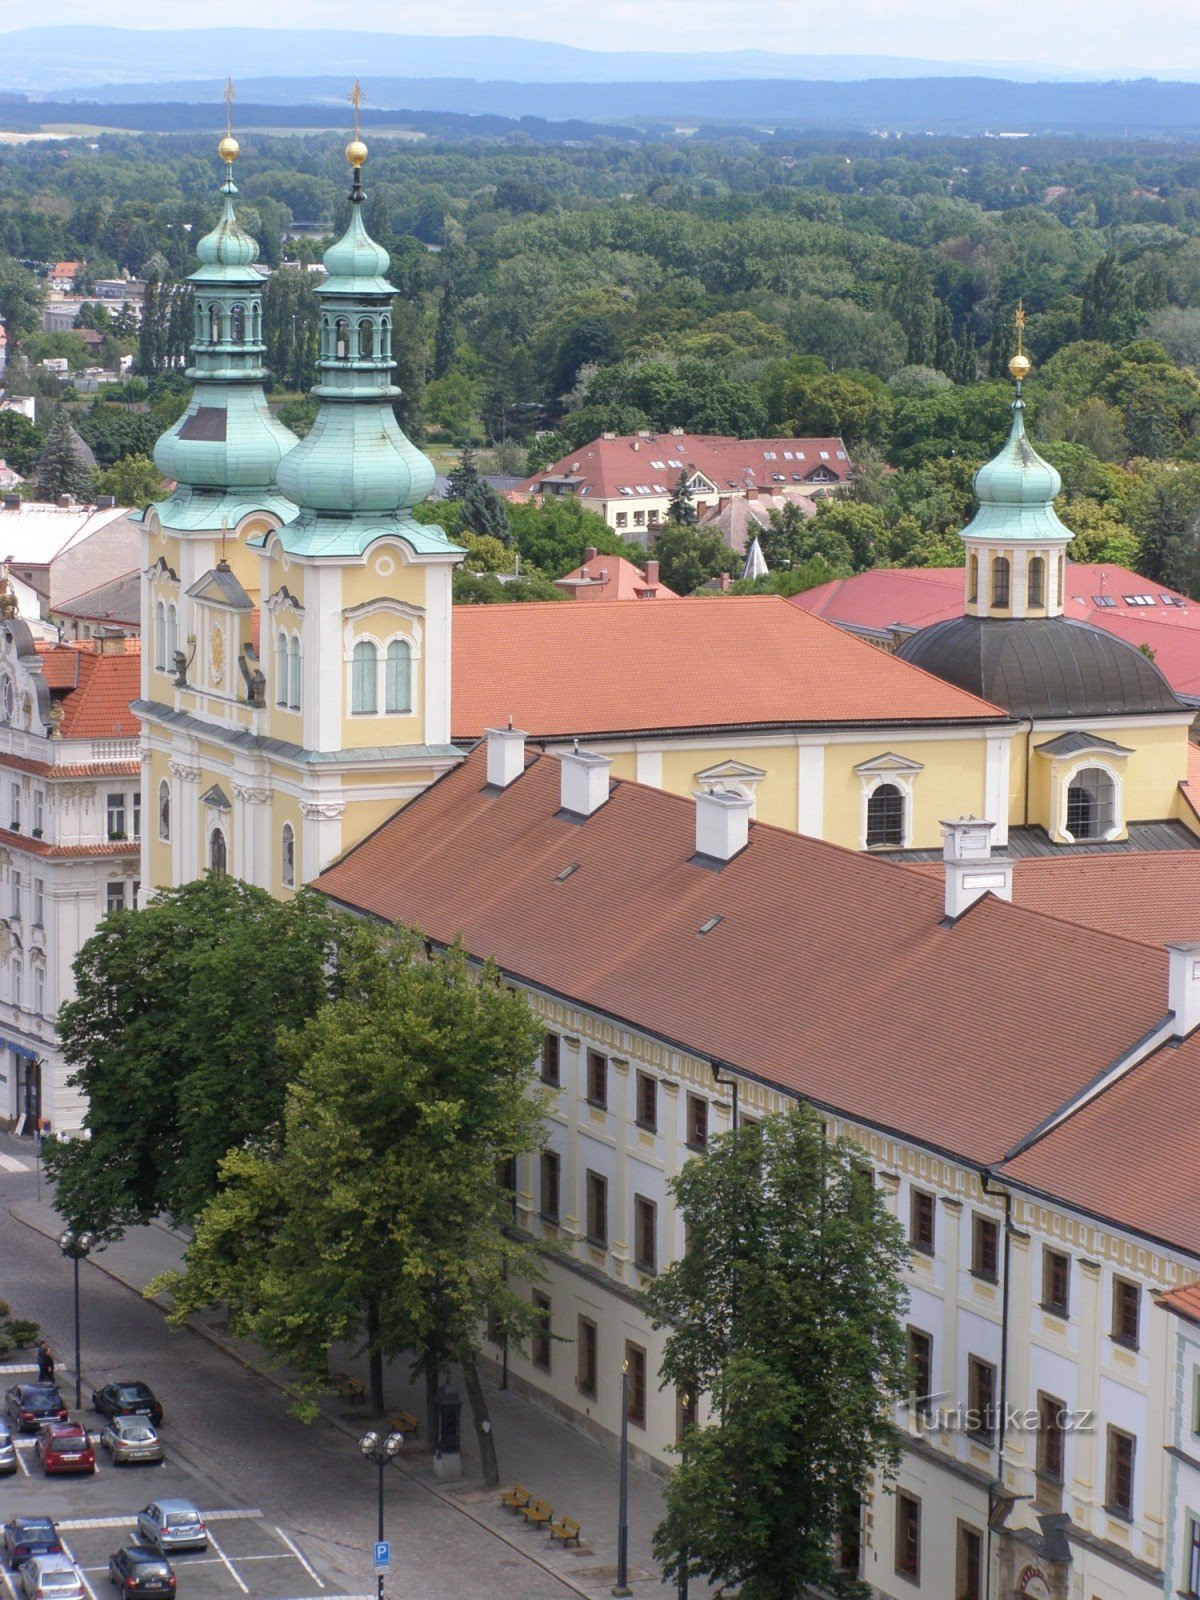 Hradec Králové - tidligere jesuitkollegium - New Adalbertinum